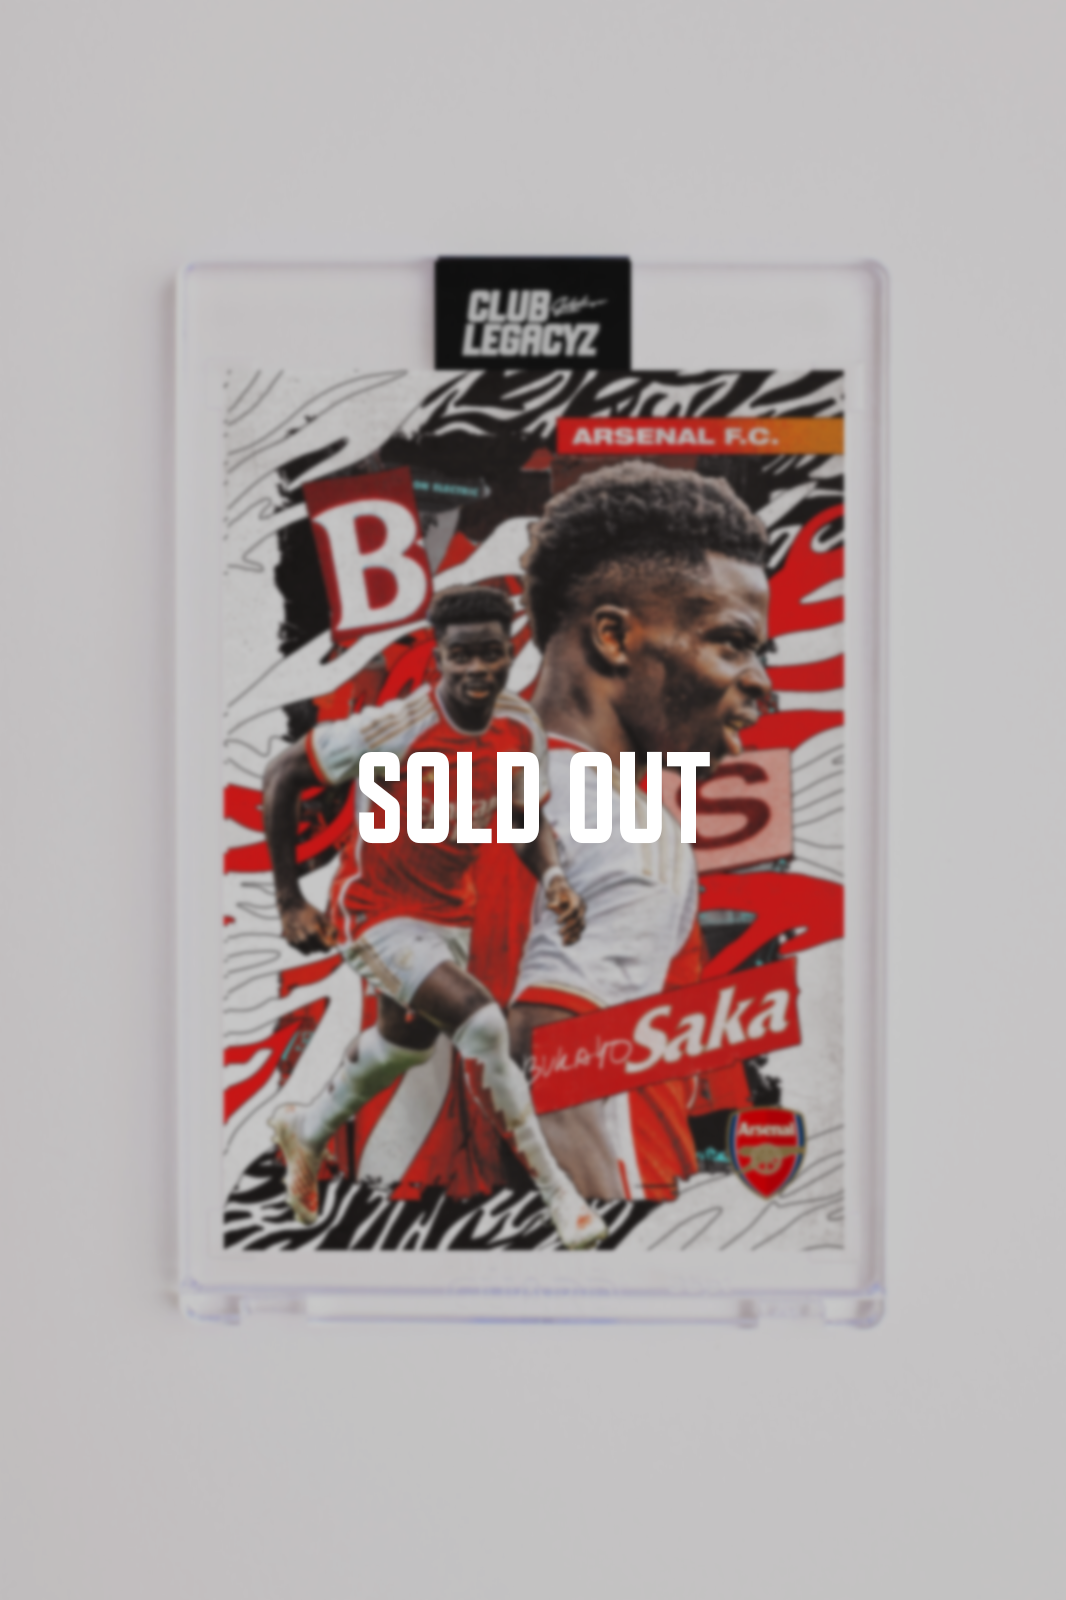 Arsenal FC - Bukayo Saka Icon limited to 50